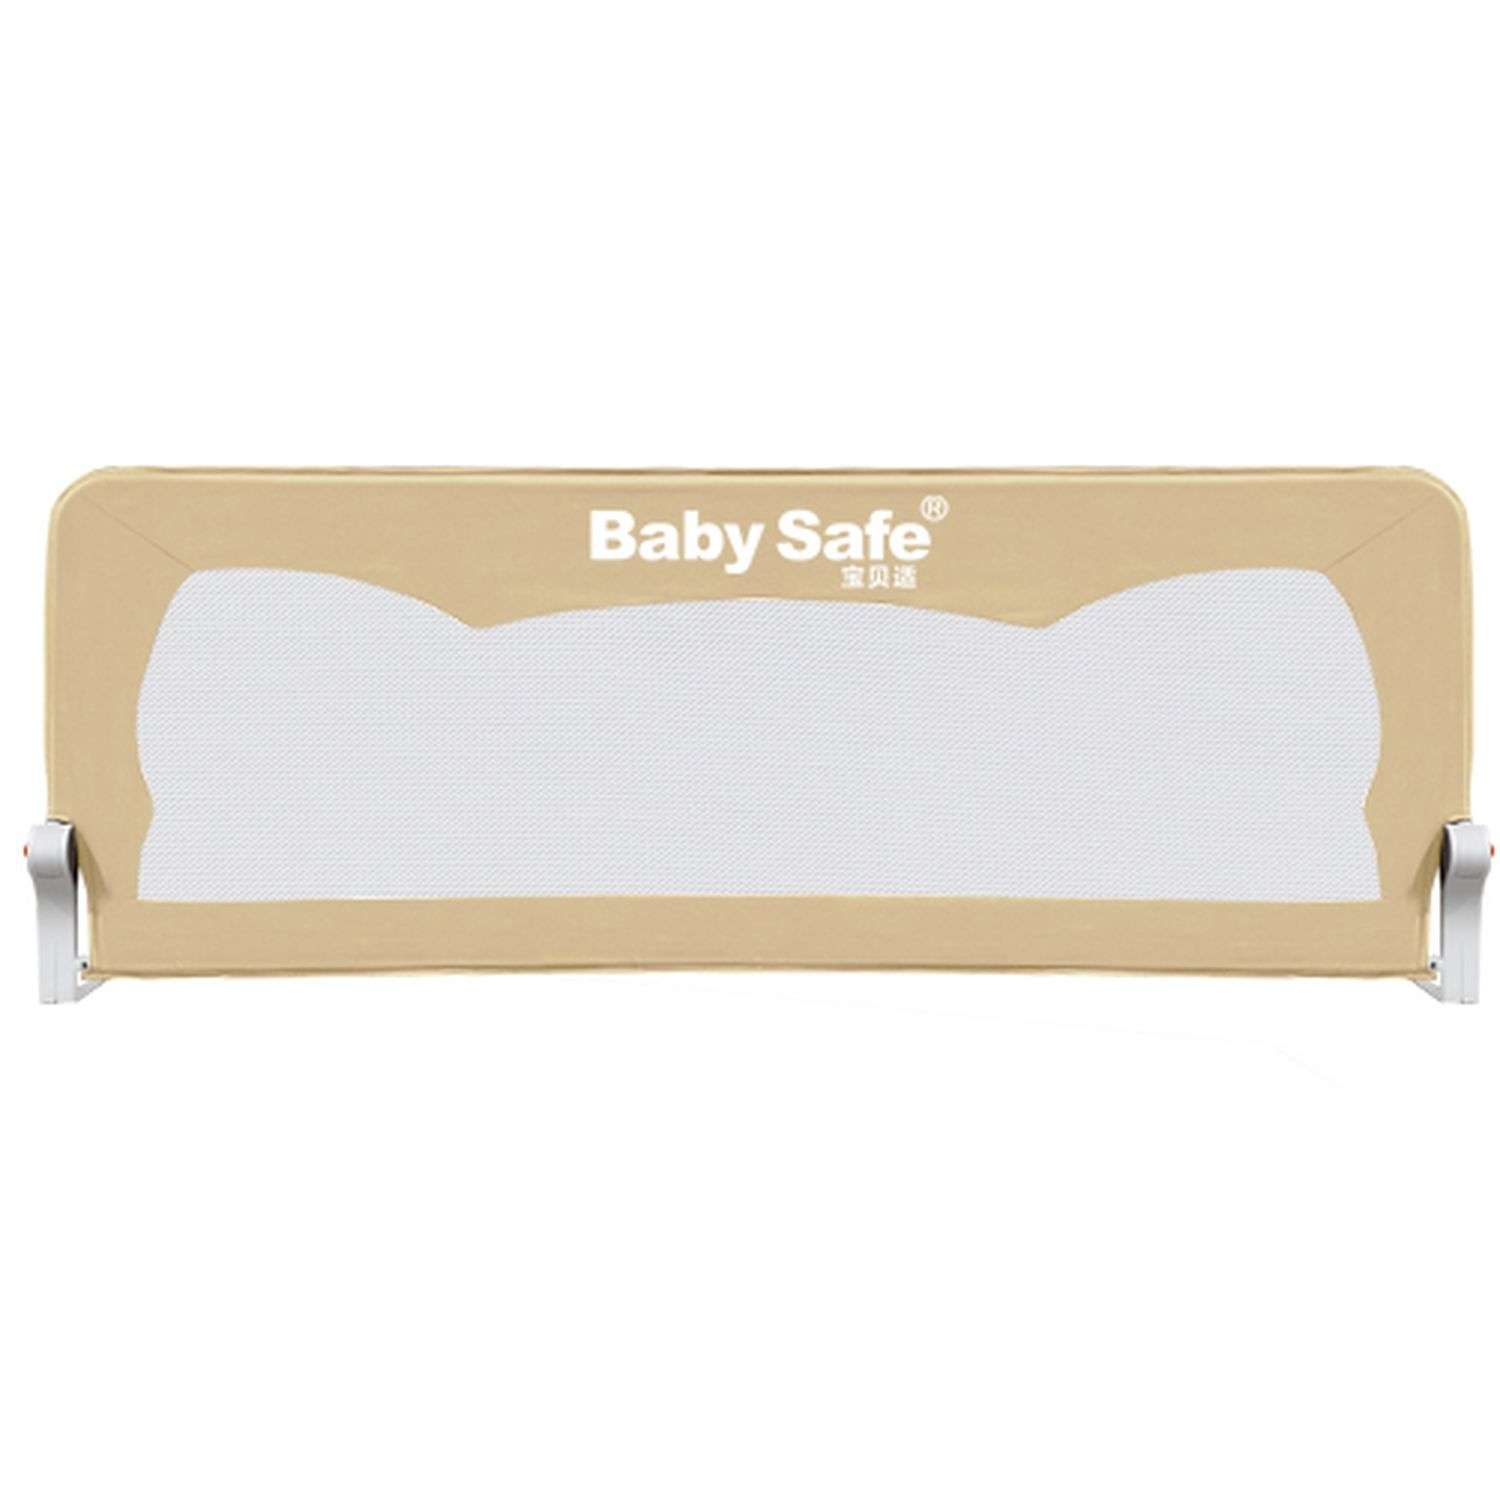 Барьер защитный для кровати Baby Safe защитный для кровати Ушки 150х66 бежевый - фото 2